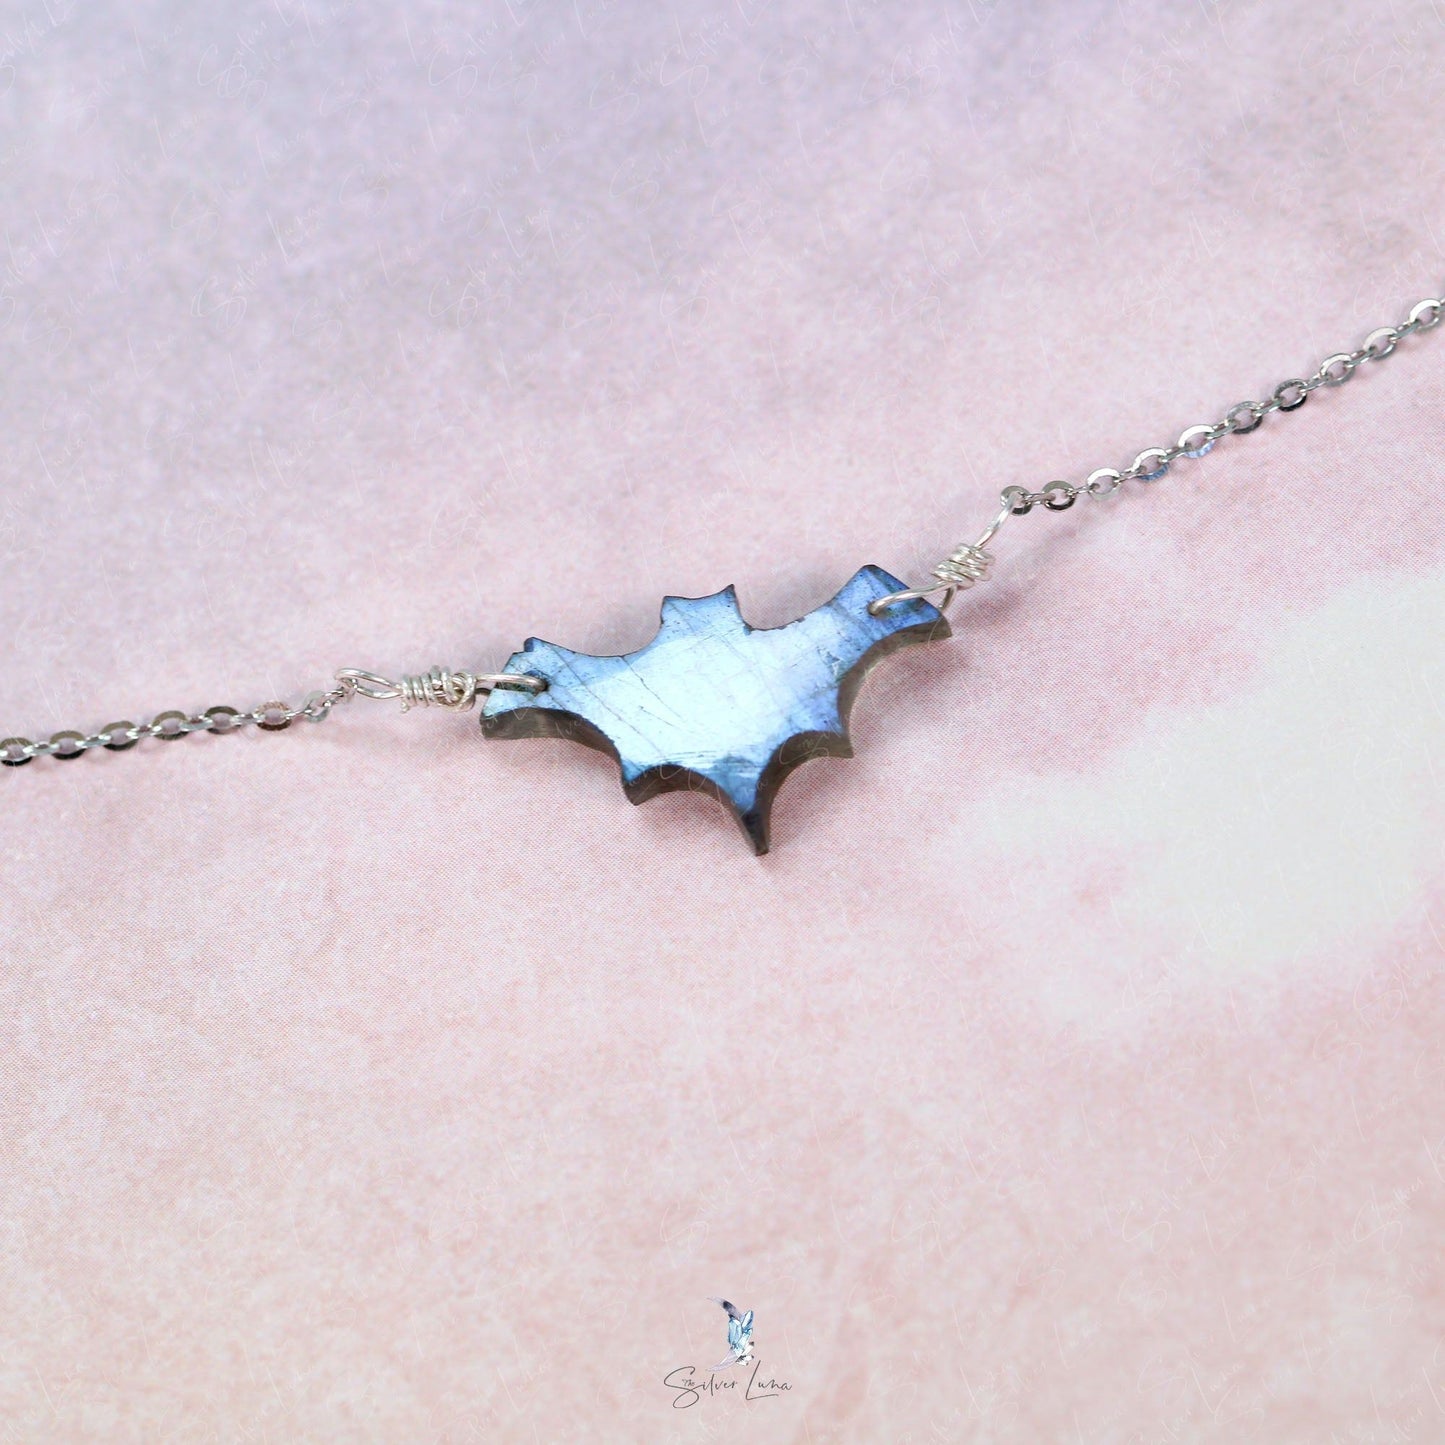 Labradorite bat sterling silver pendant necklace